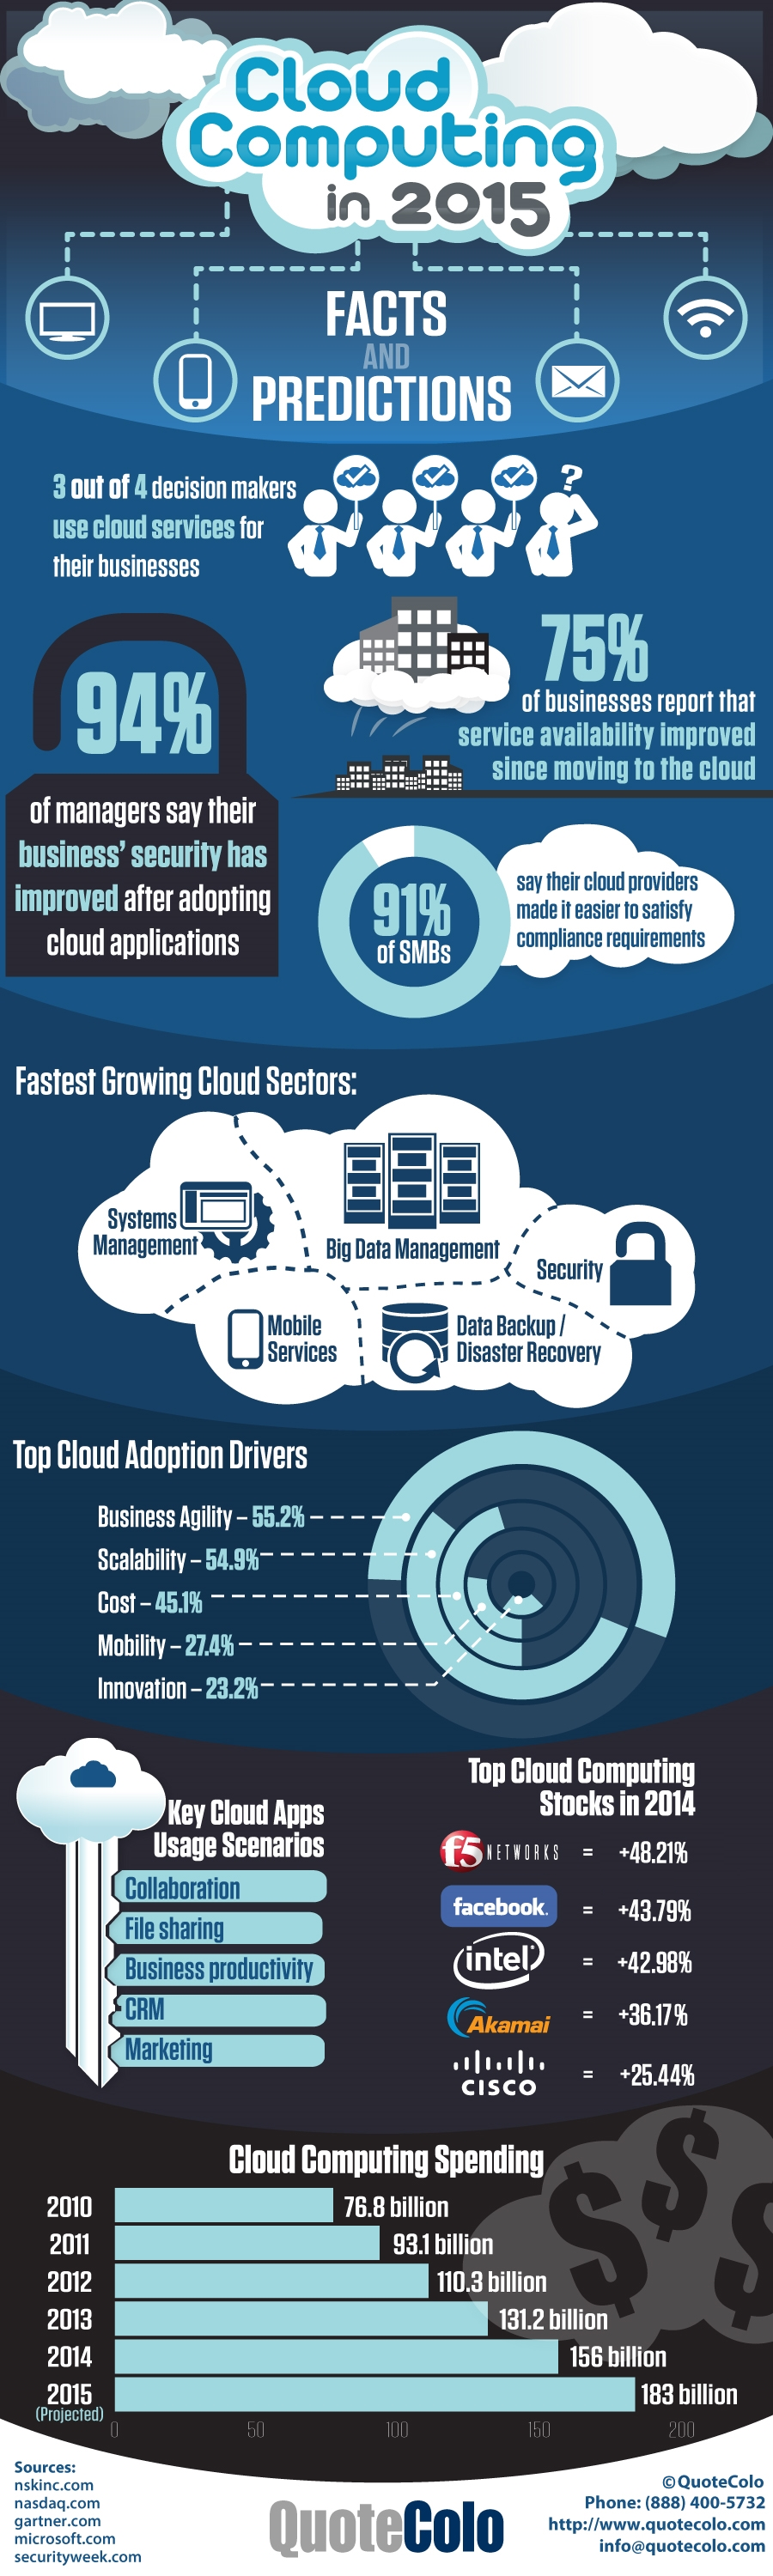 cloud-computing-in-2015